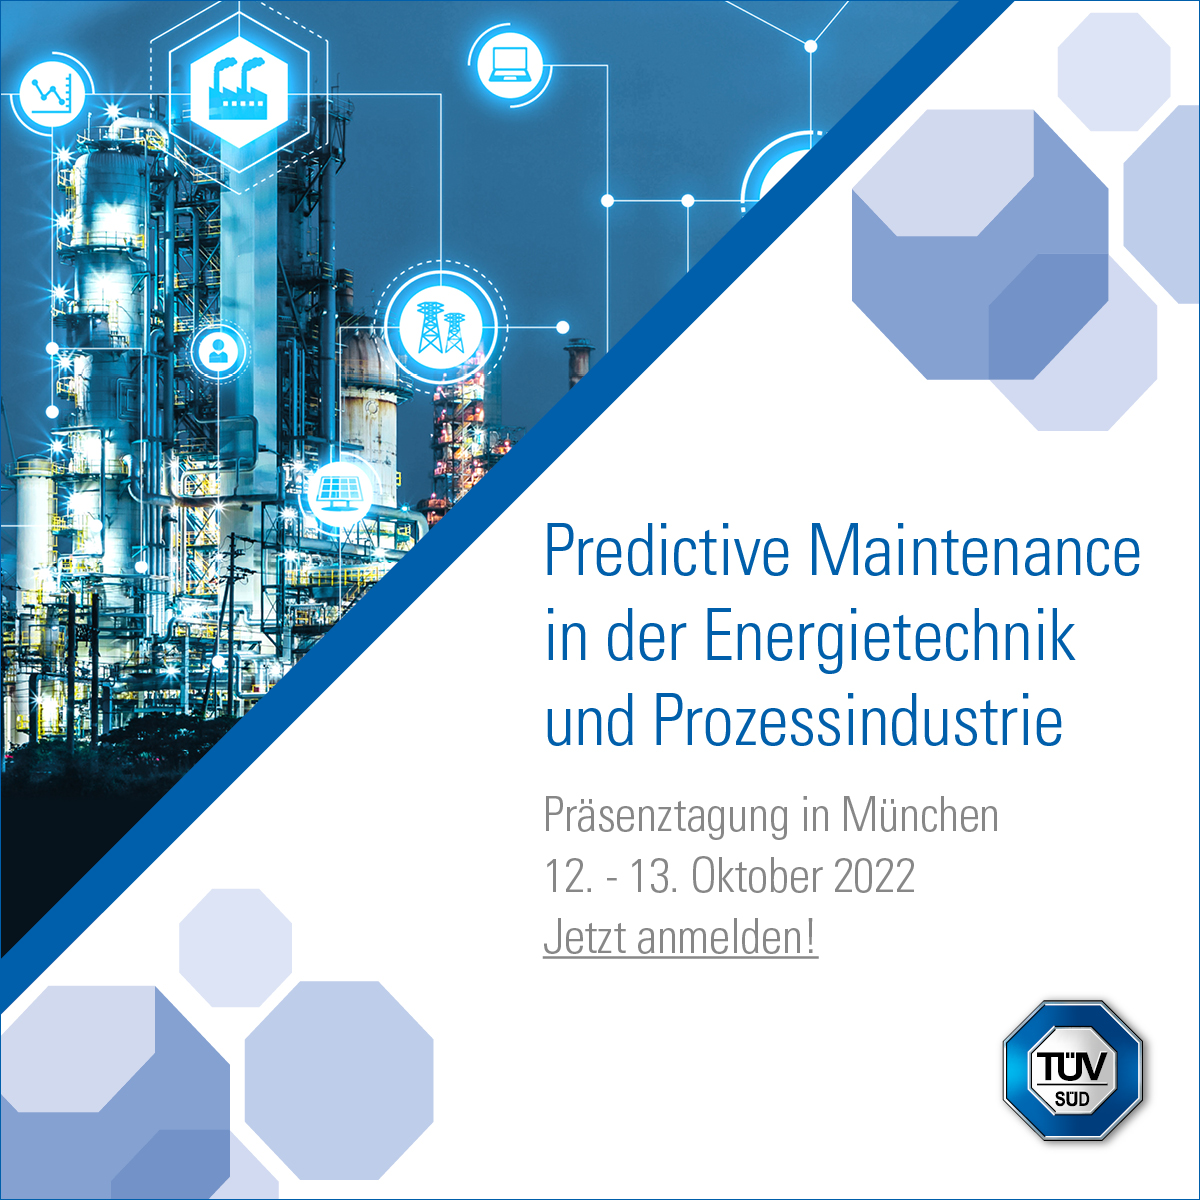 Alpha Diagnostics @TÜV SÜD Predictive Maintenance Conference in Munich (October 12/13)